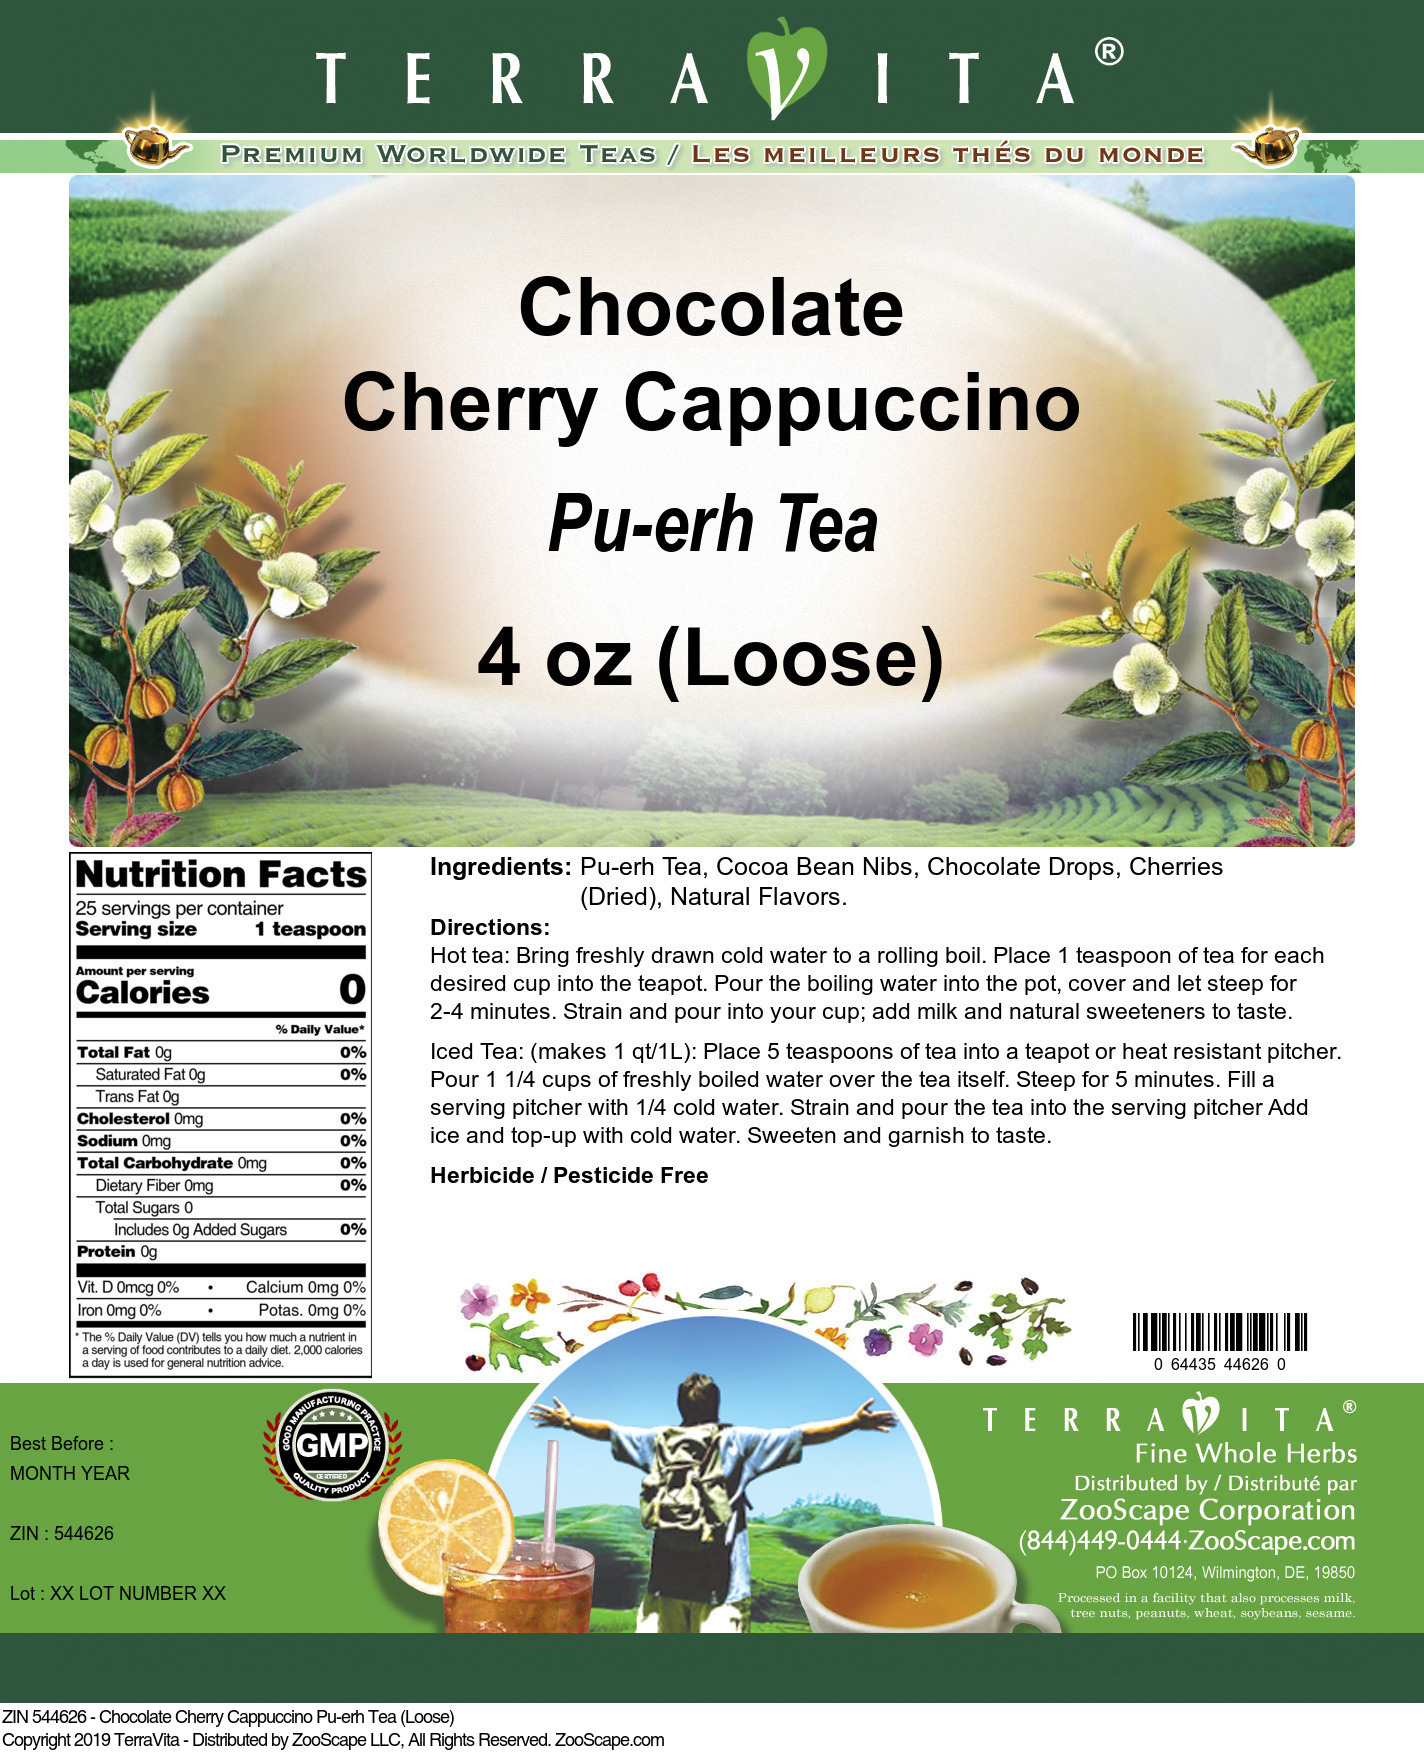 Chocolate Cherry Cappuccino Pu-erh Tea (Loose) - Label